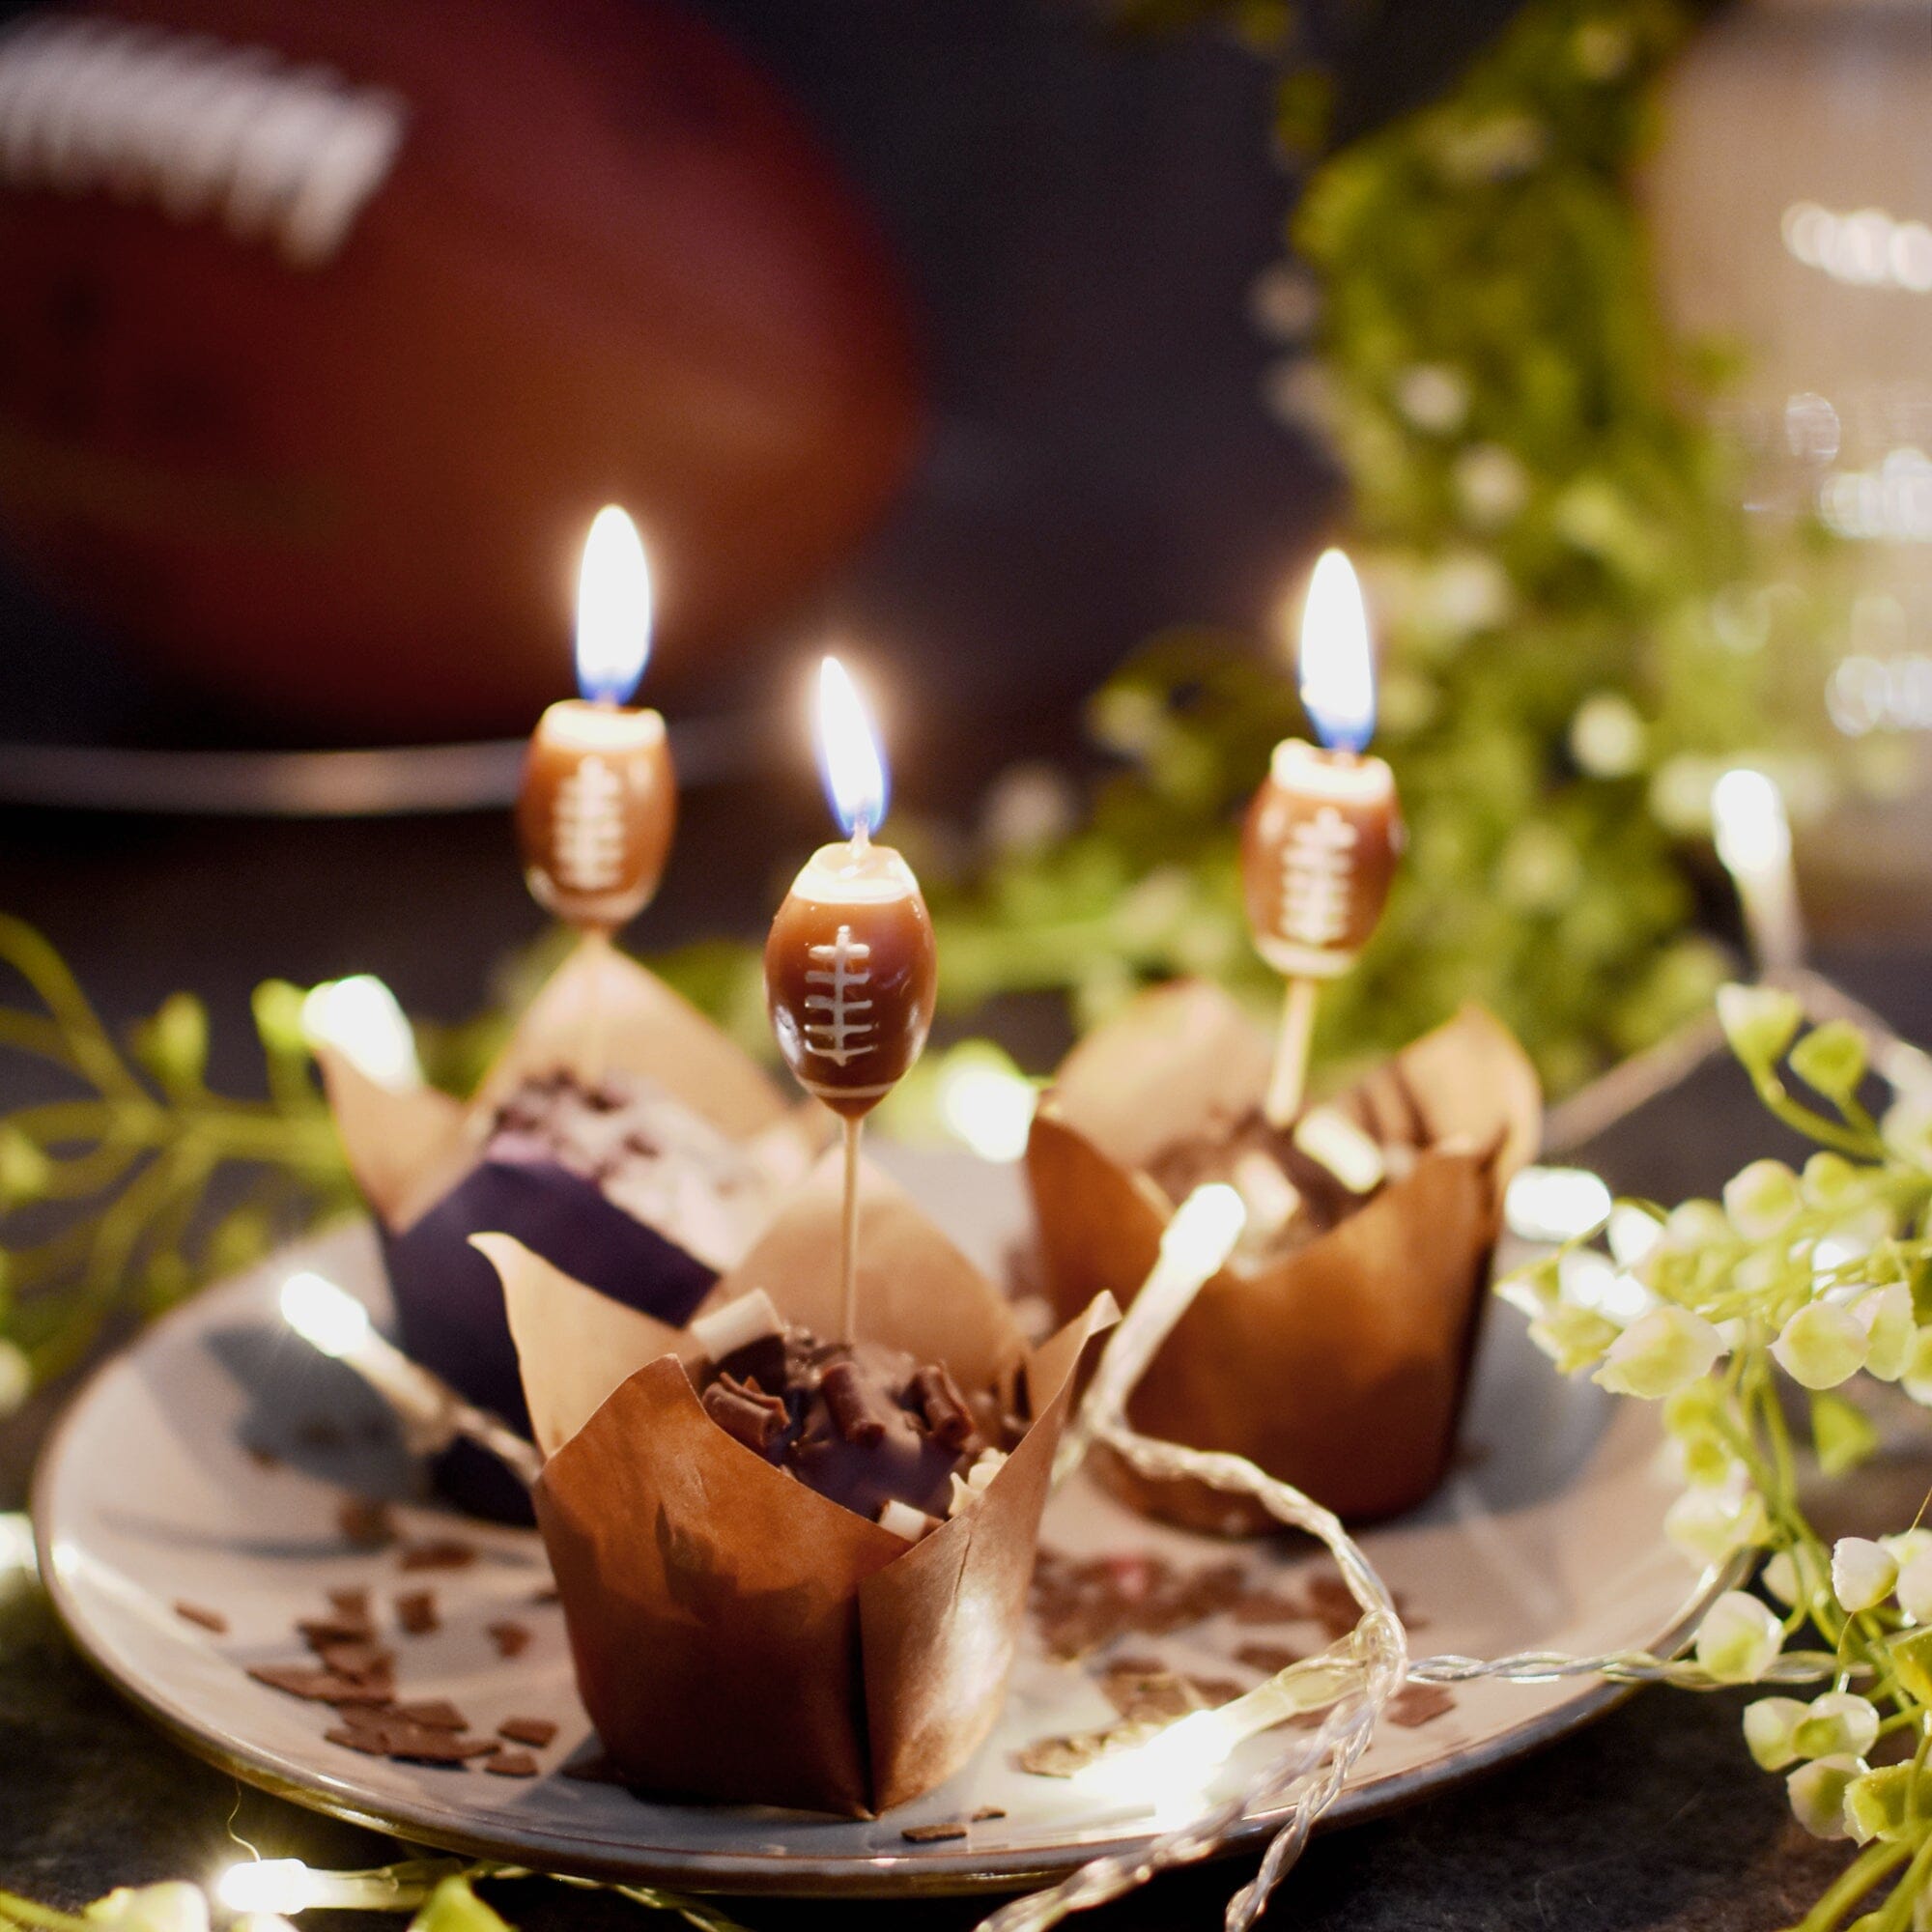 Football Kerzen in Muffins als Geburtstagsdeko